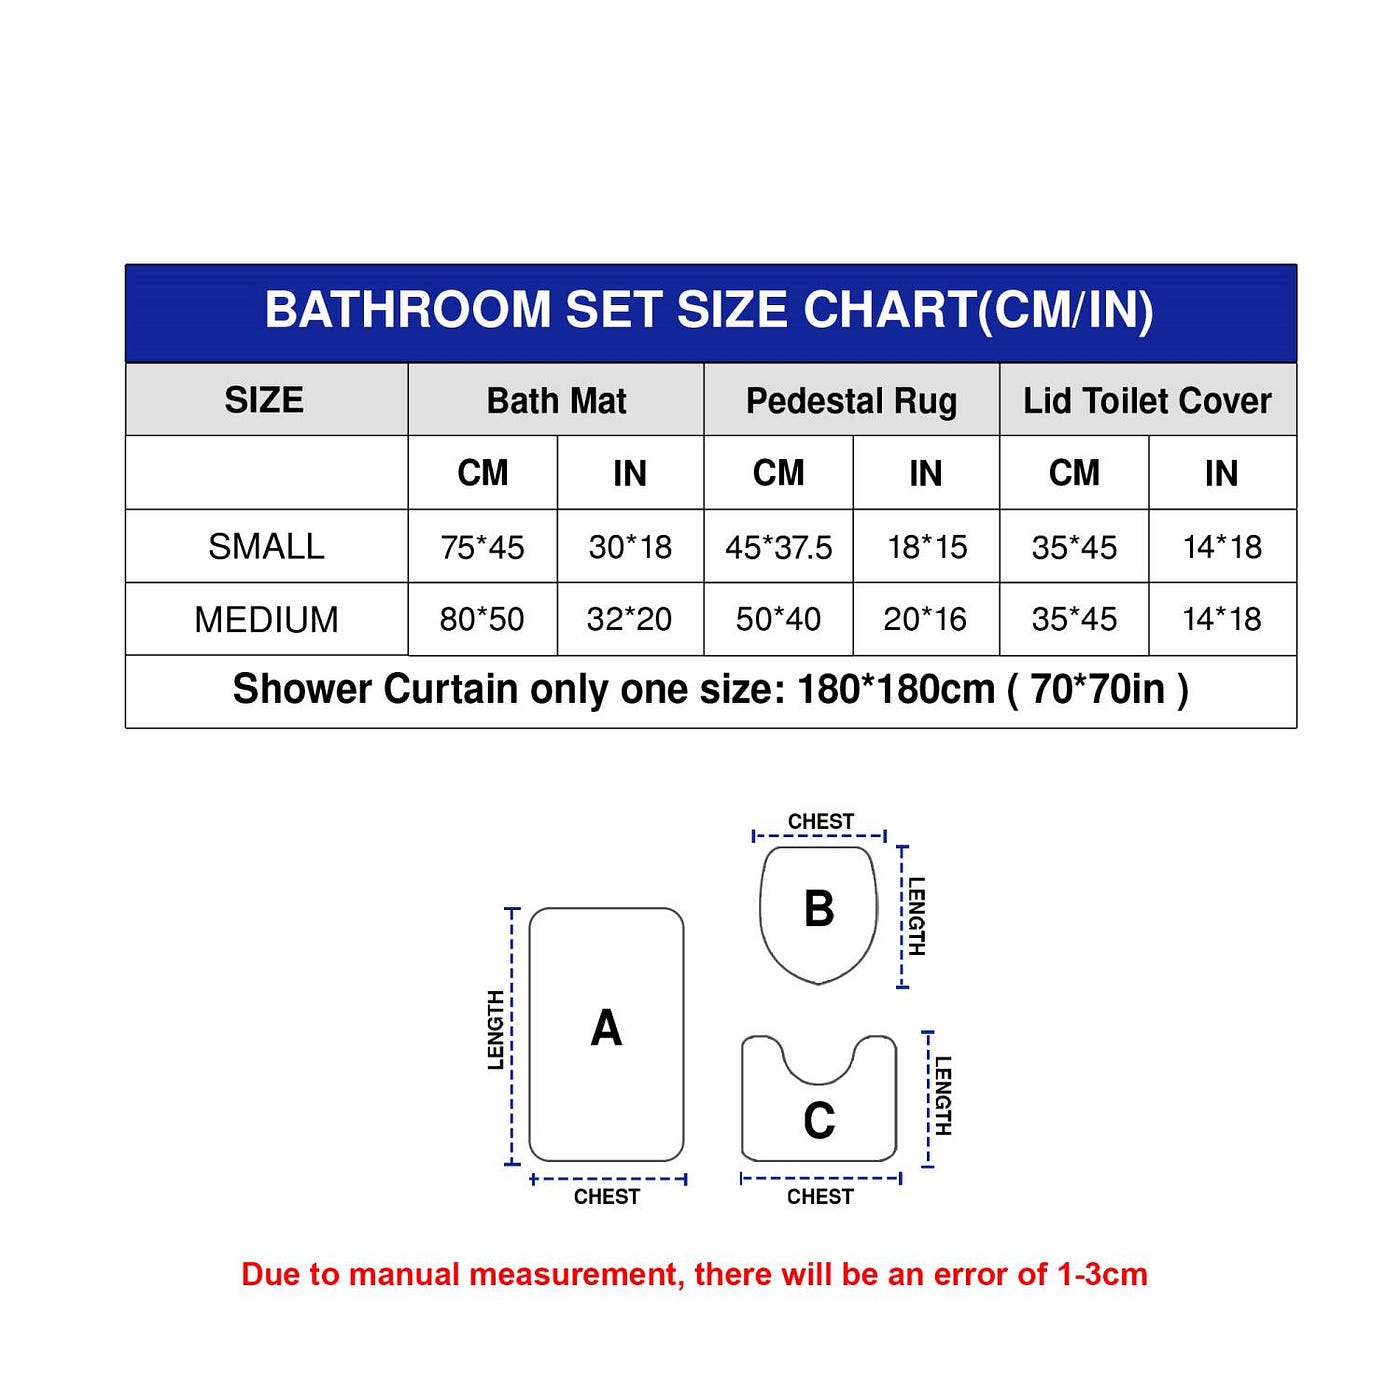 Louis vuitton luxury bathroom set shower curtain style 50